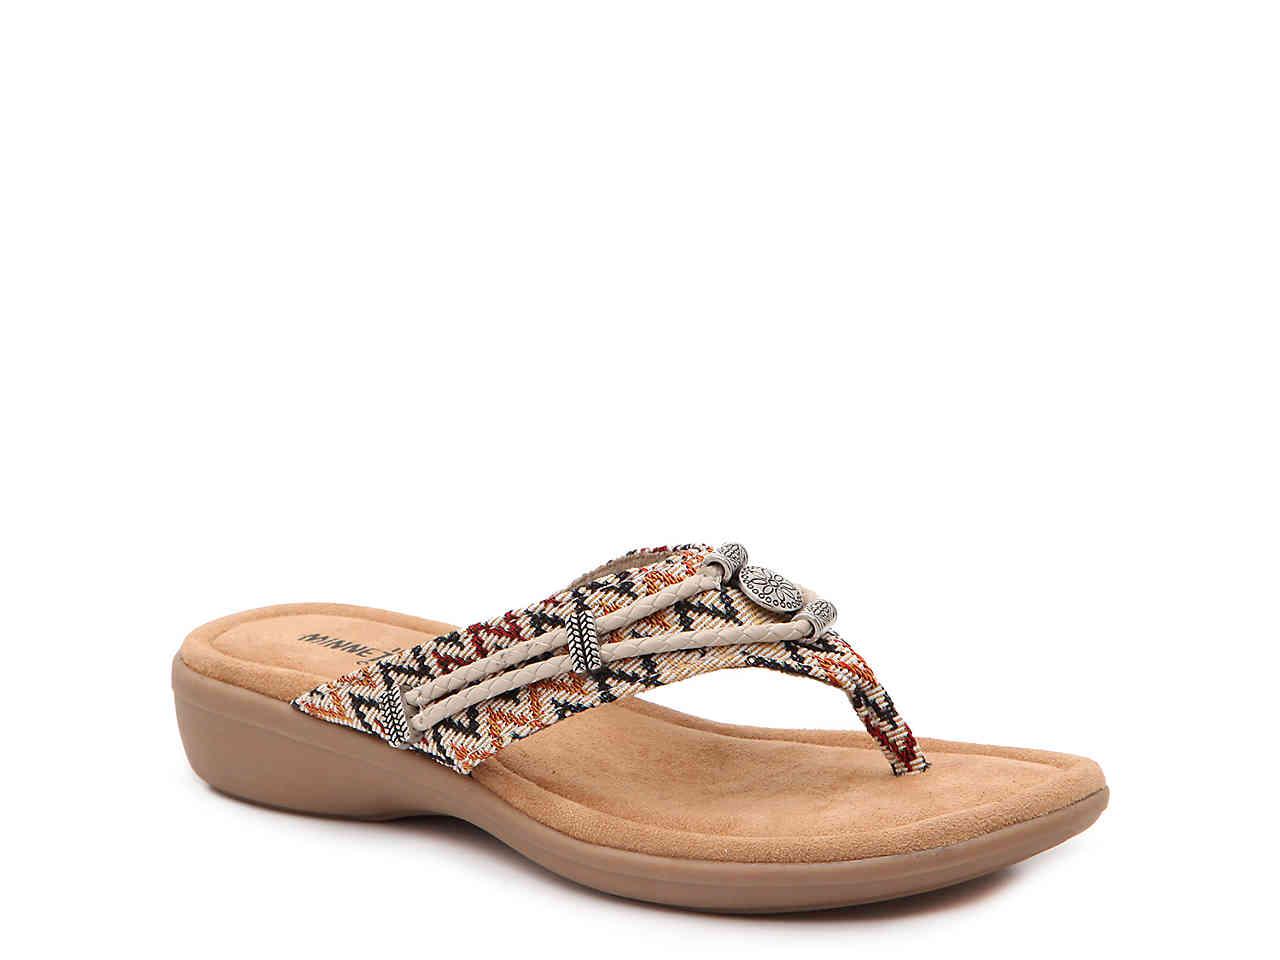 Minnetonka Leather Silverbay Wedge Sandal in Brown - Lyst